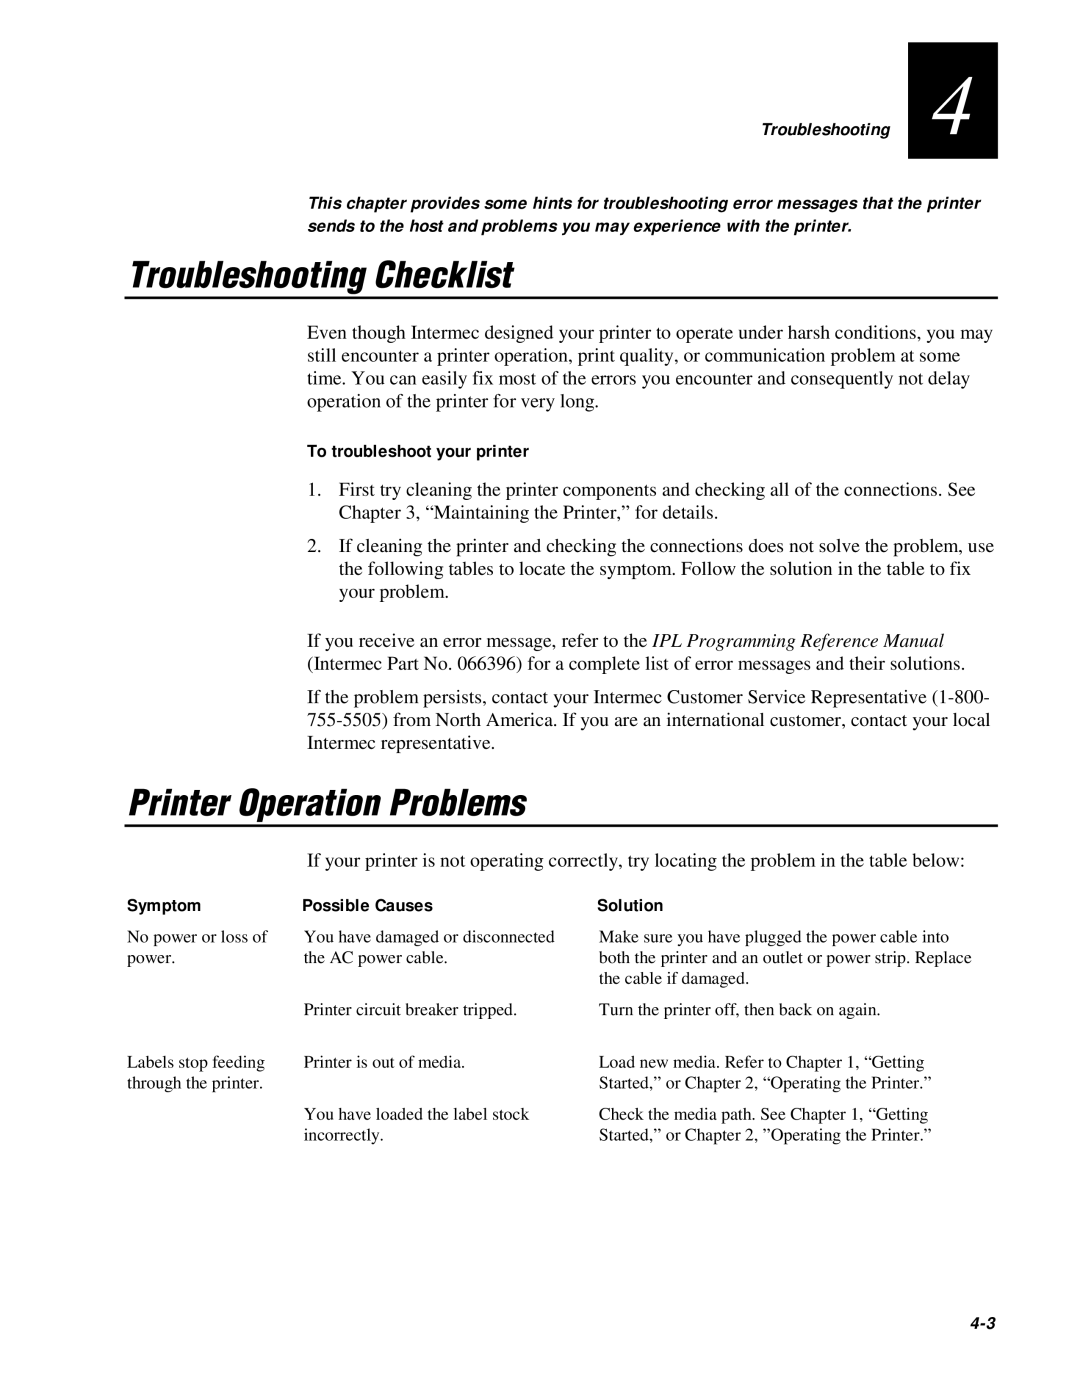 IBM EasyCoder 3400e Troubleshooting Checklist, Printer Operation Problems, To troubleshoot your printer, Symptom 